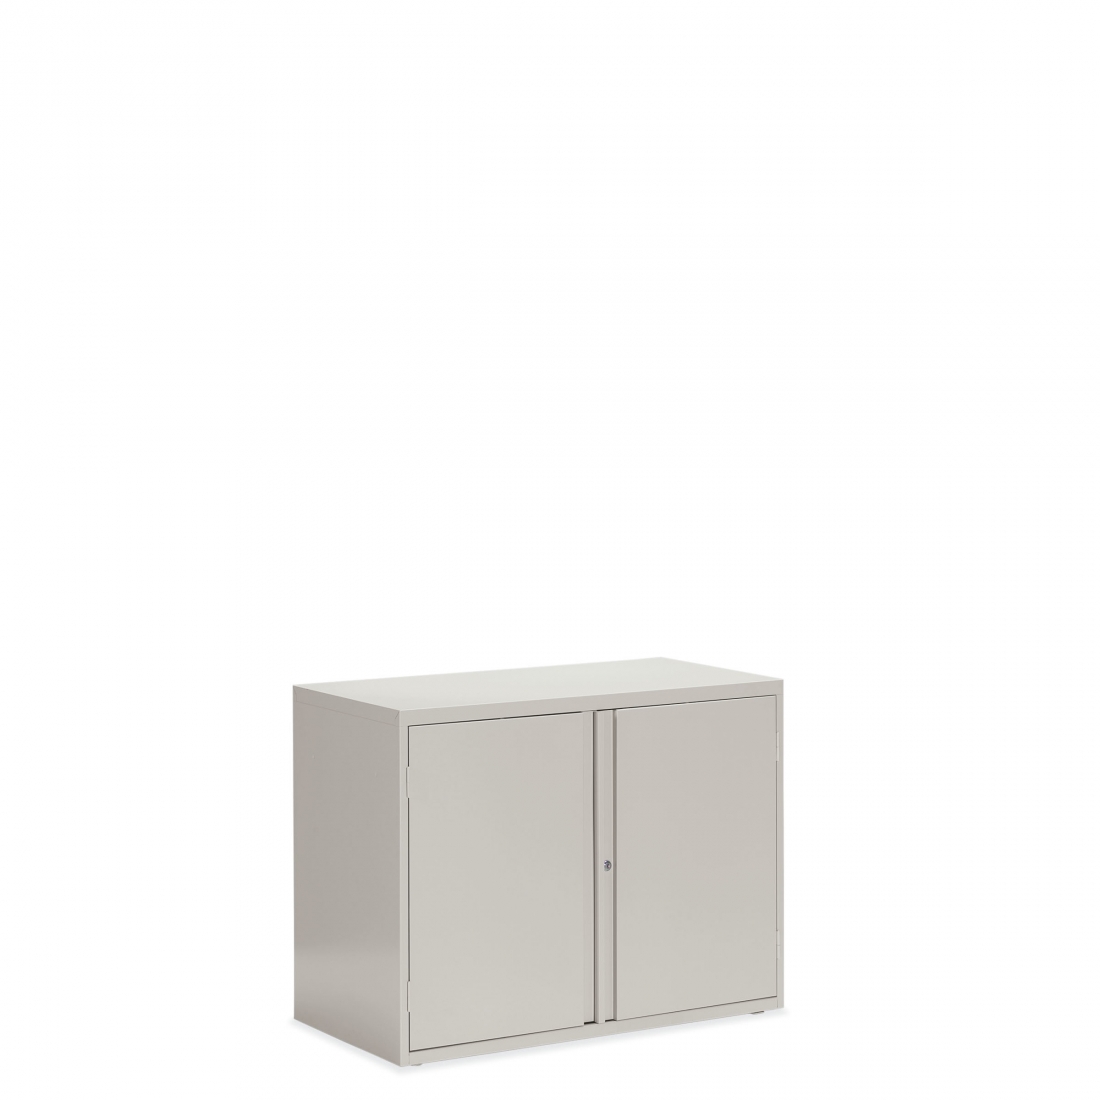 9300 Series Storage Cabinets | Global